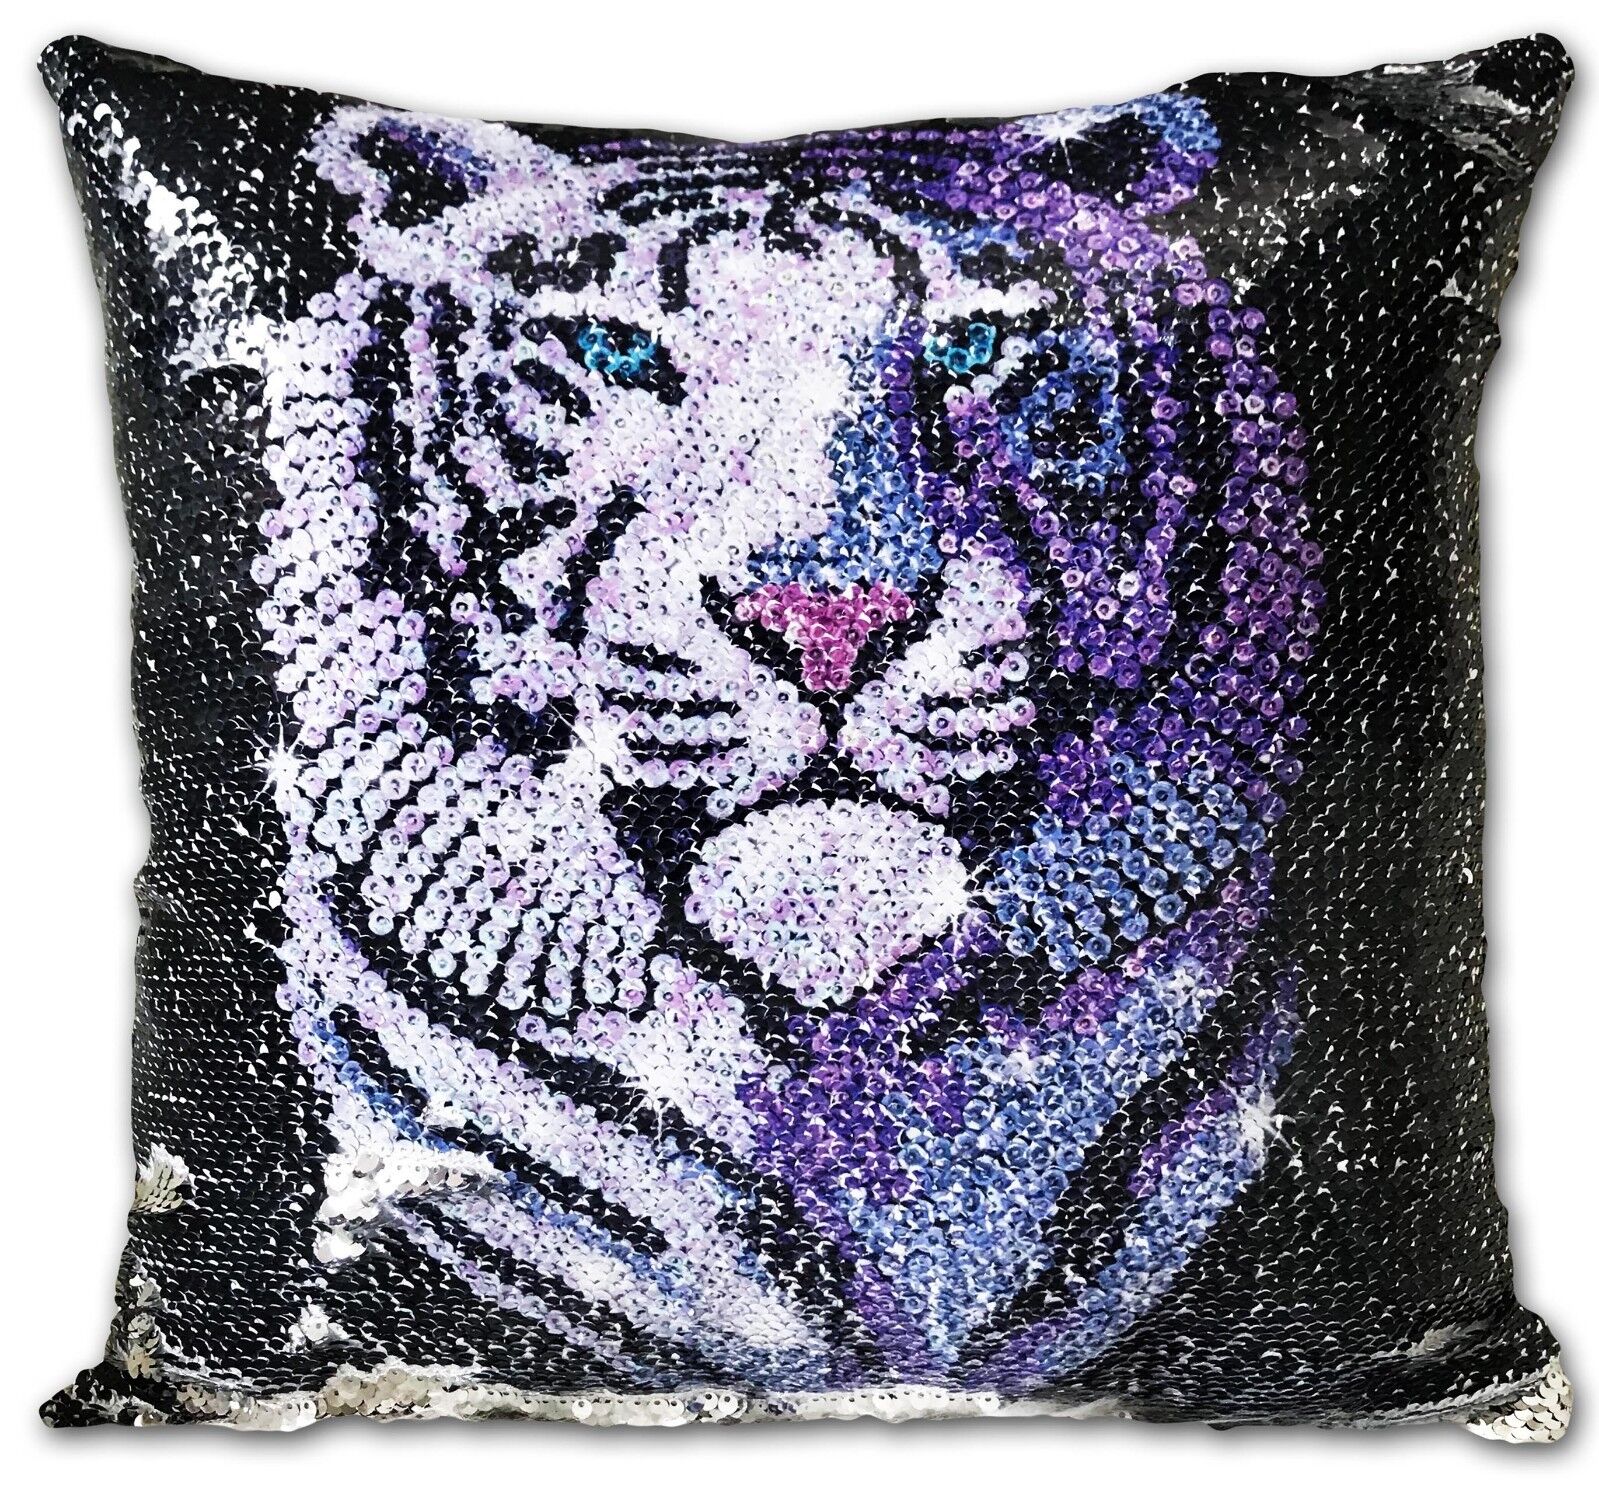 White Tiger Cushion